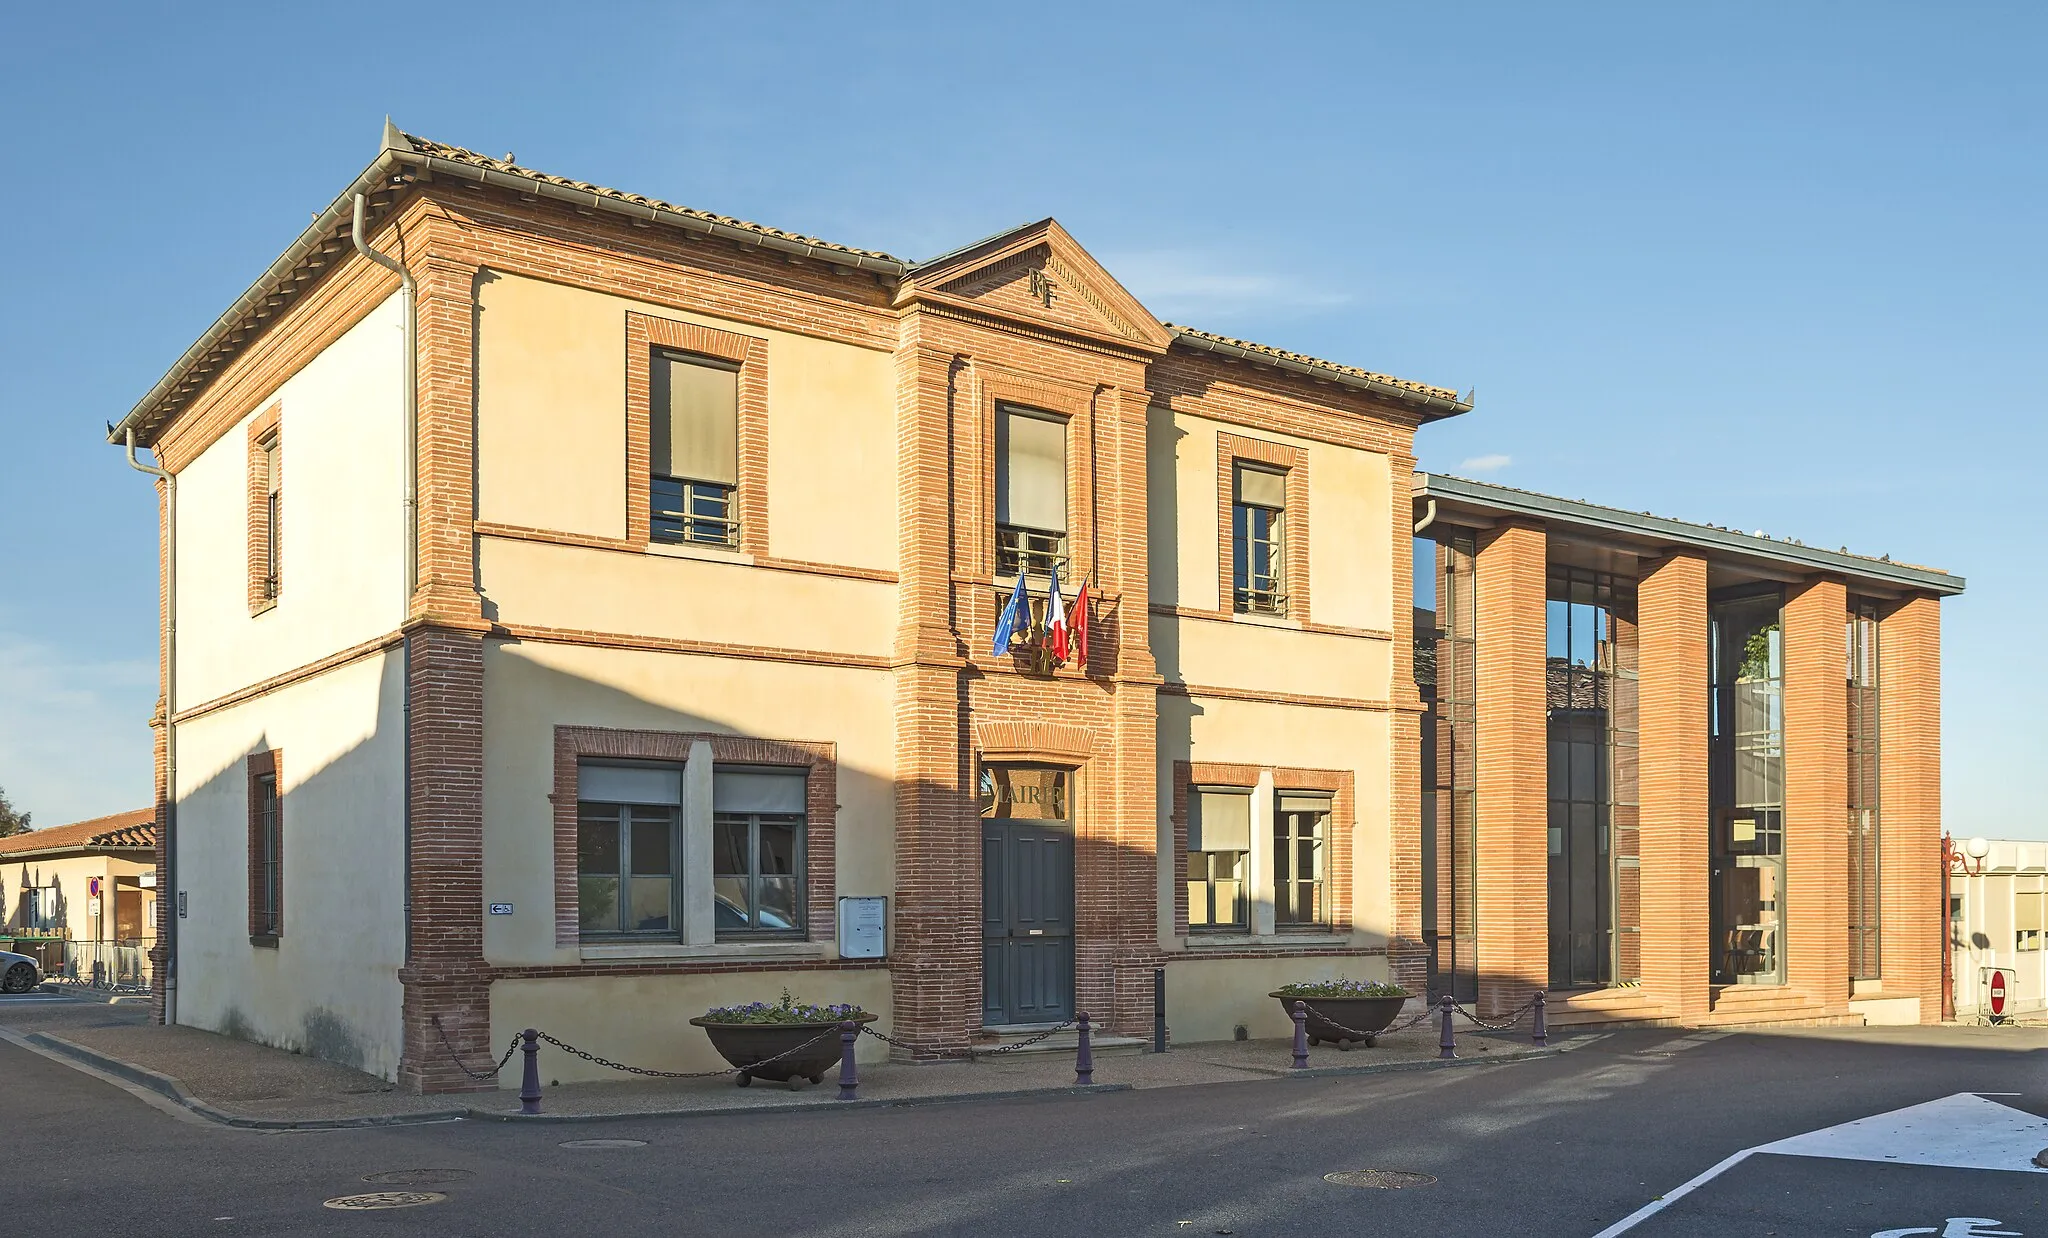 Photo showing: Town halll of Aussonne, Haute-Garonne France.